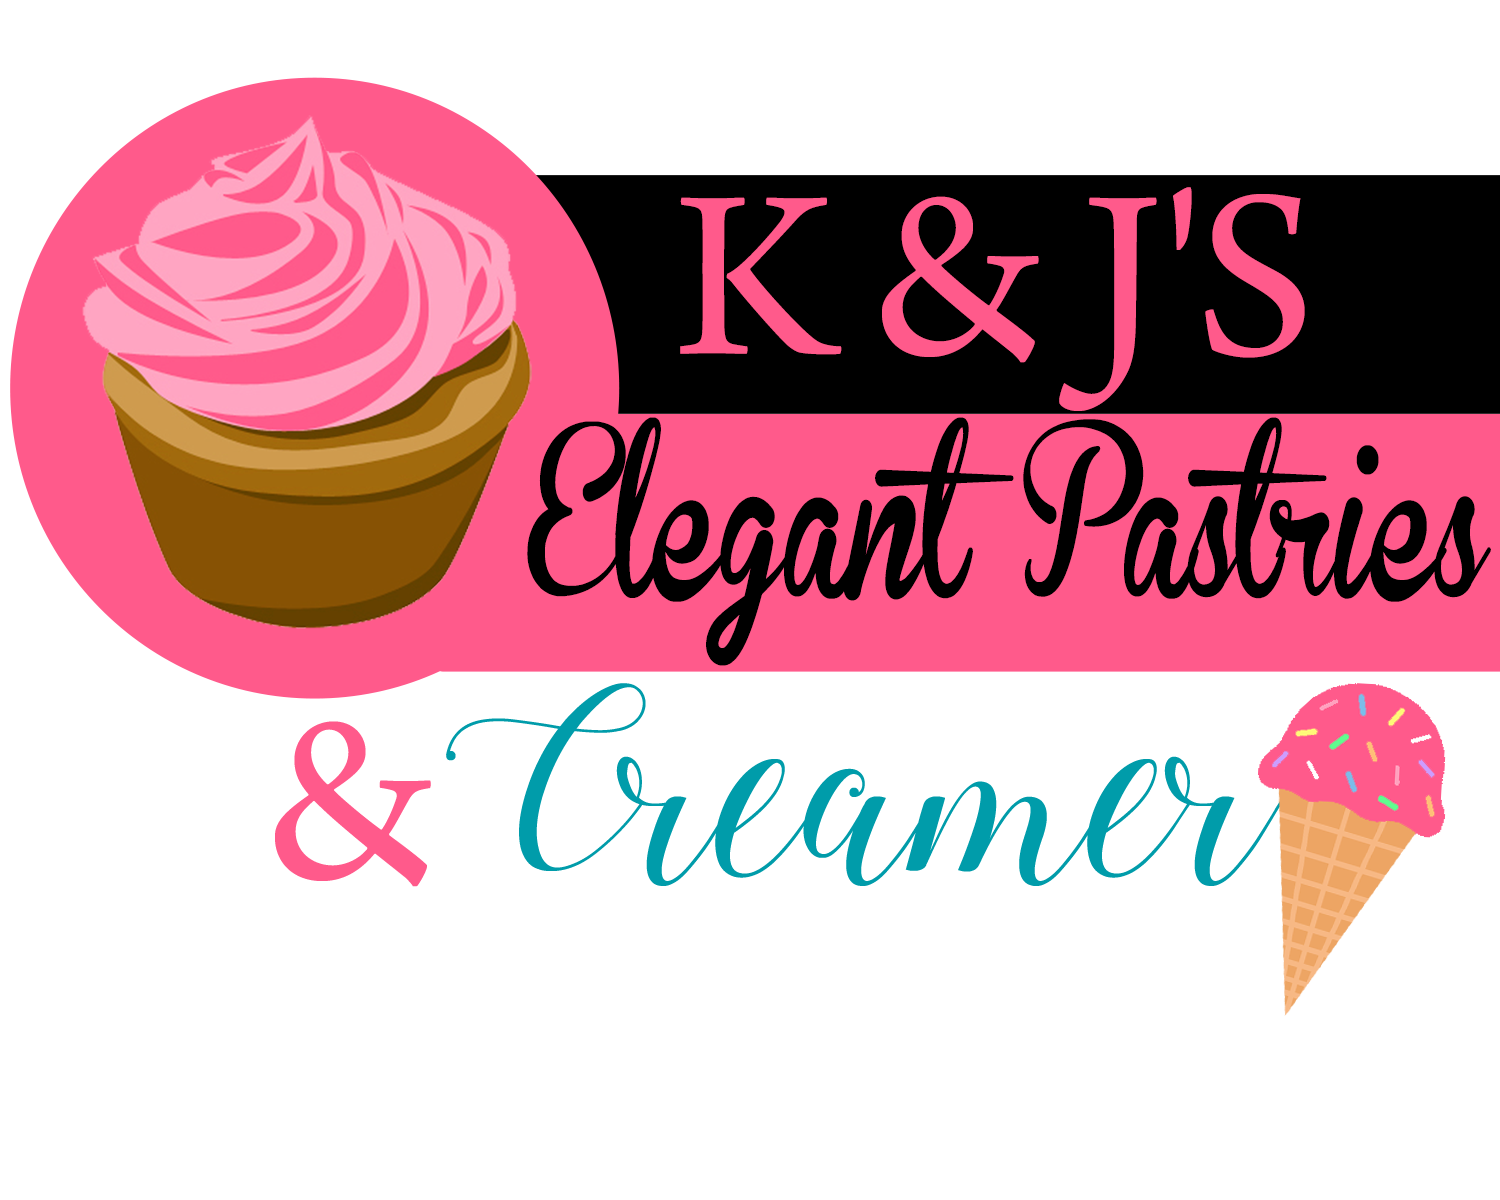 K&J's Elegant Pastries